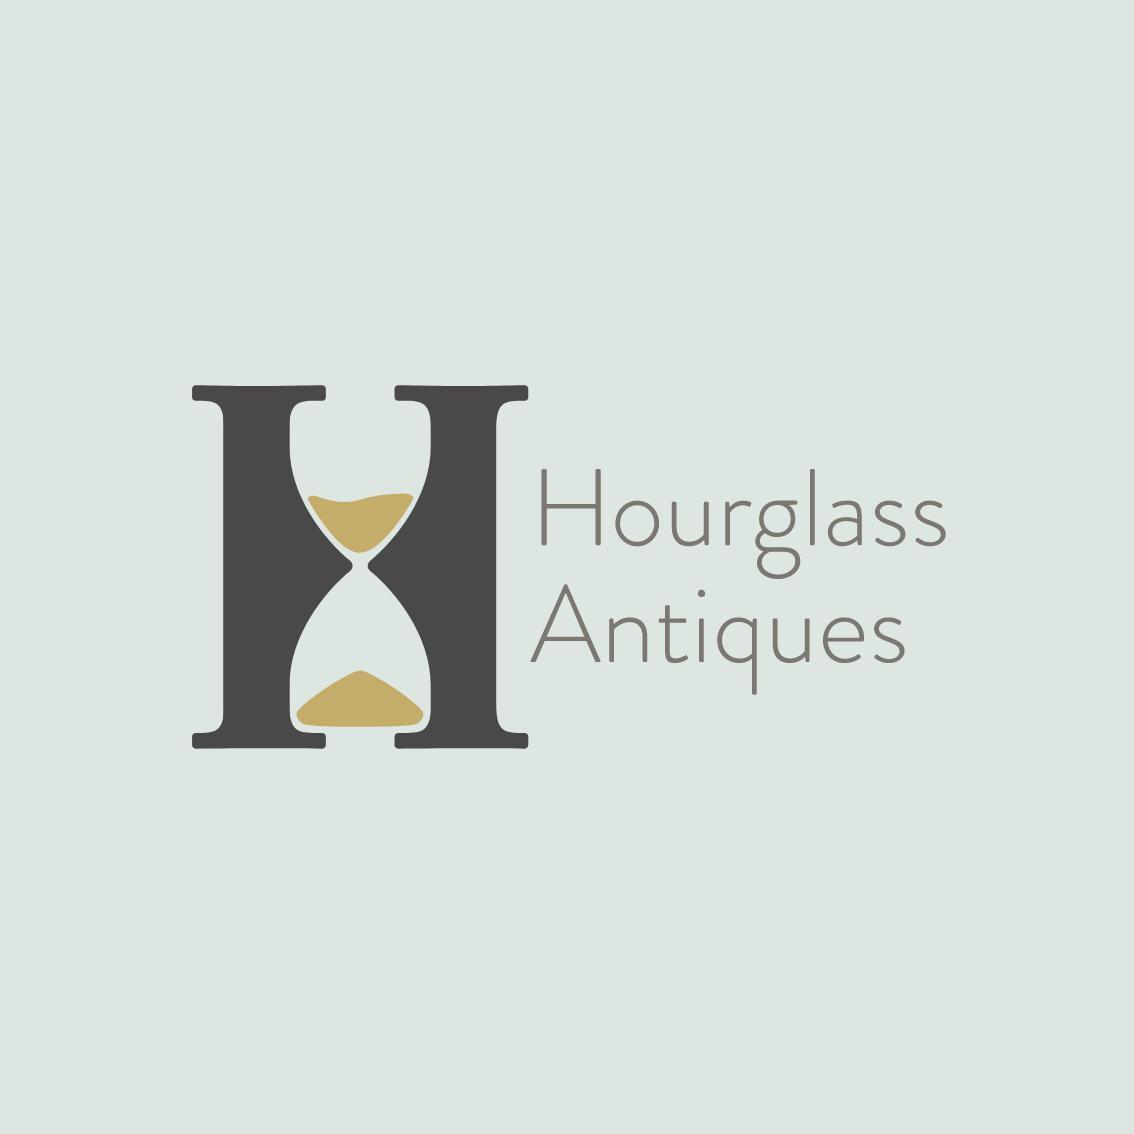 Antiques Logo - Logo design for an antique shop called Hourglass Antiques